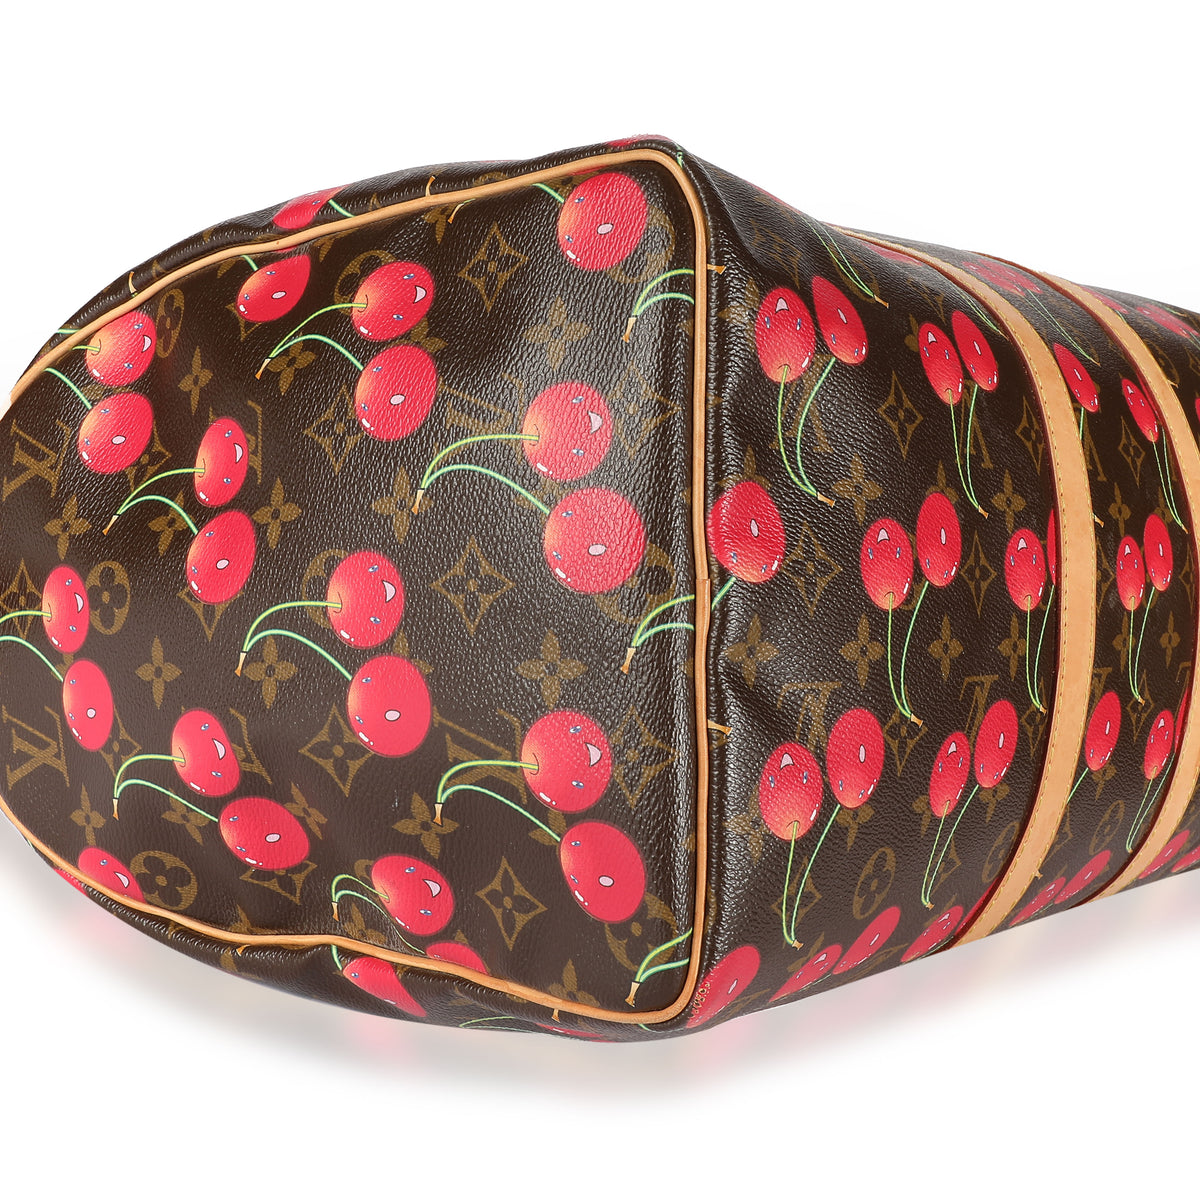 Pre-owned Louis Vuitton Murakami Cherry Keepall Duffle Bag 45 In